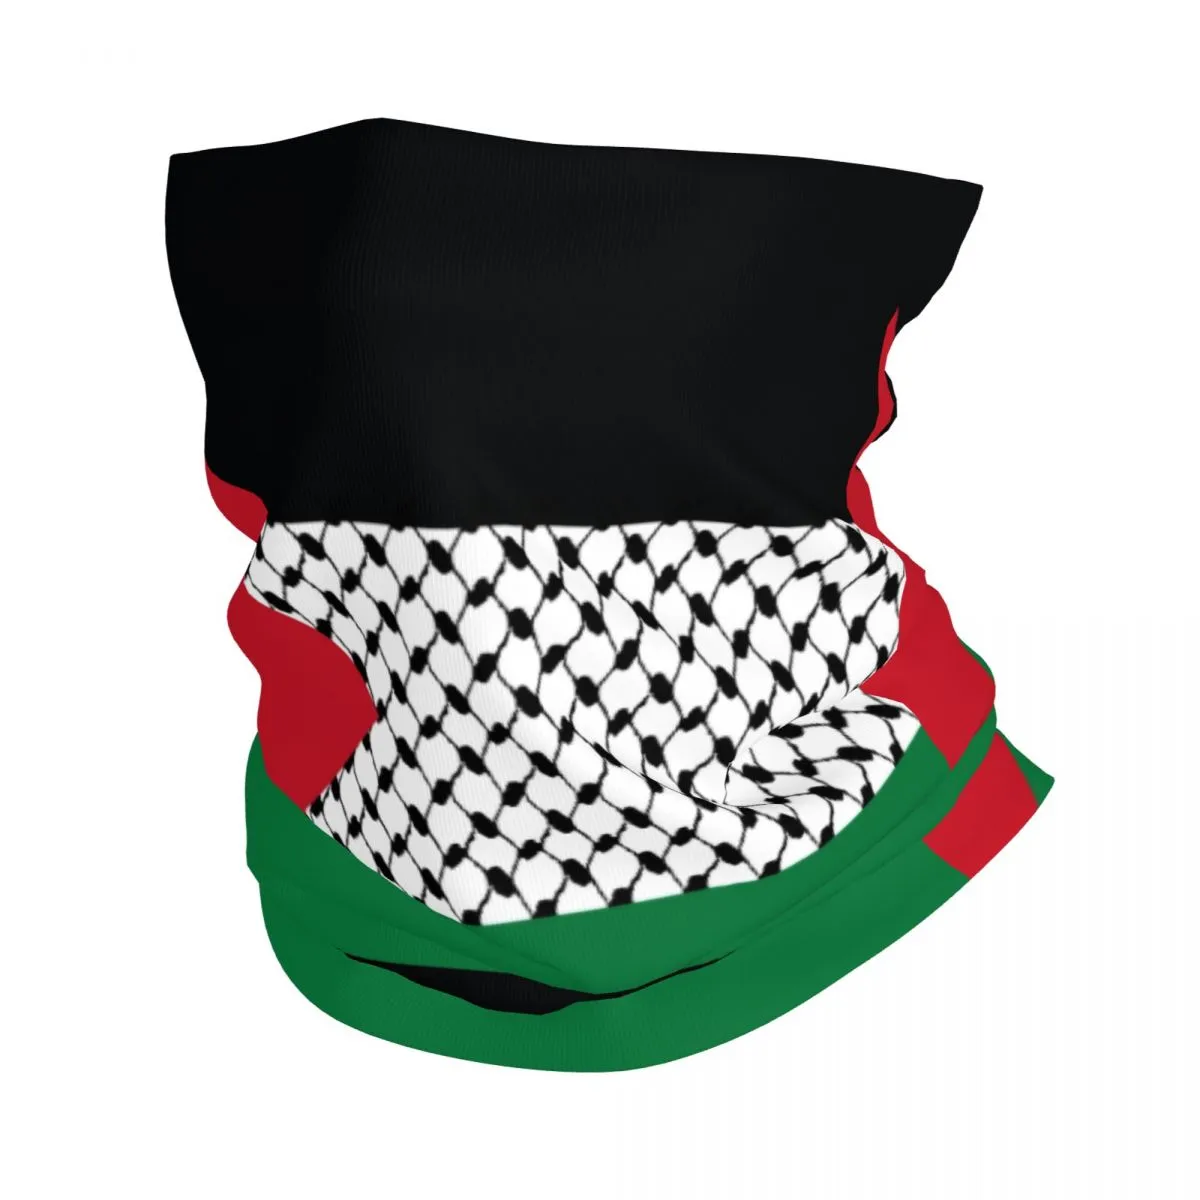 Bandana cou grillage drapeau palestine - Drapeaublog